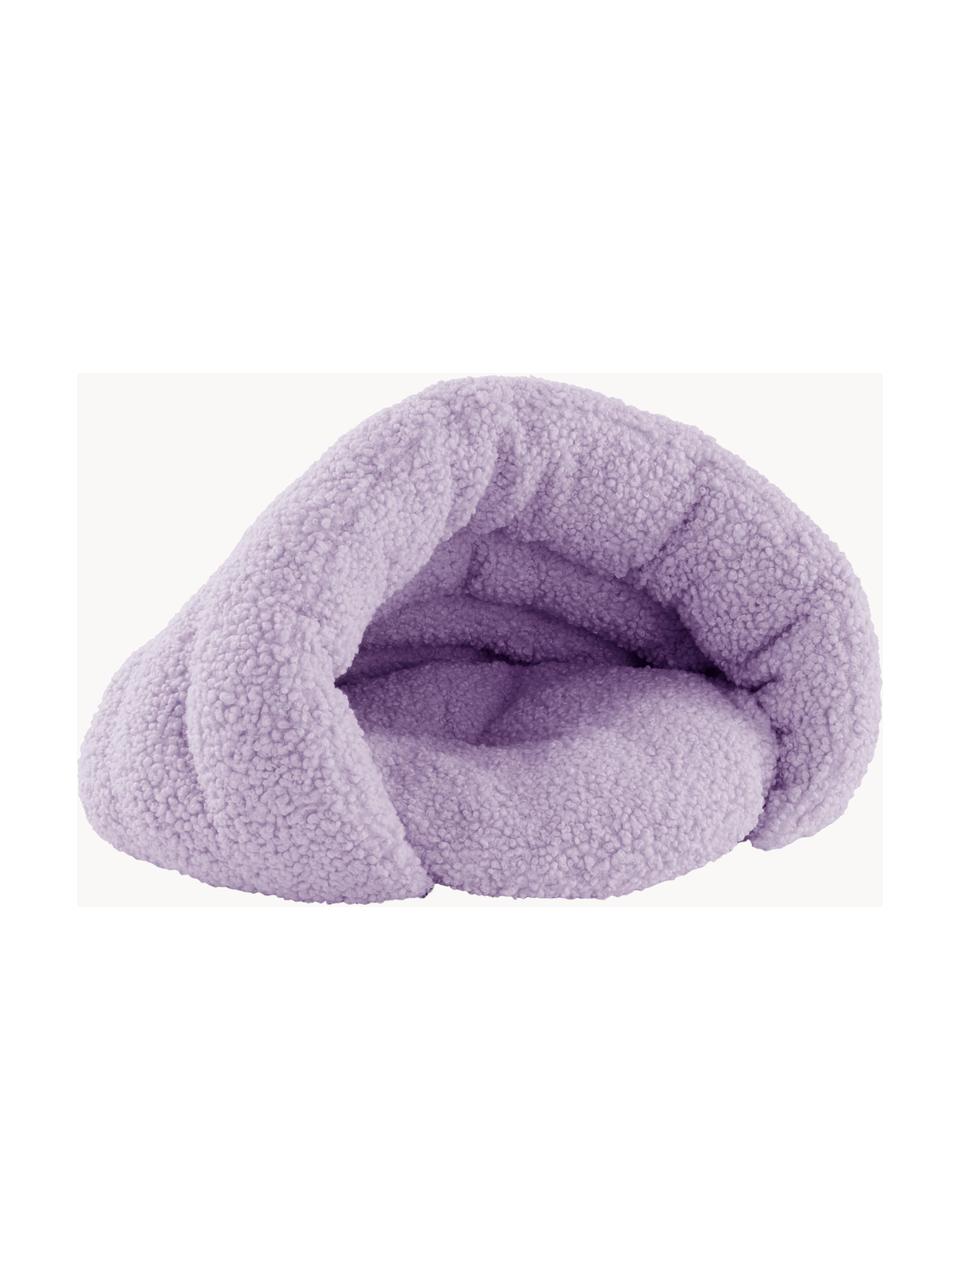 Haustierbett Teddy, Bezug: Teddy (100 % Polyester), Lavendel, B 58 x T 43 cm